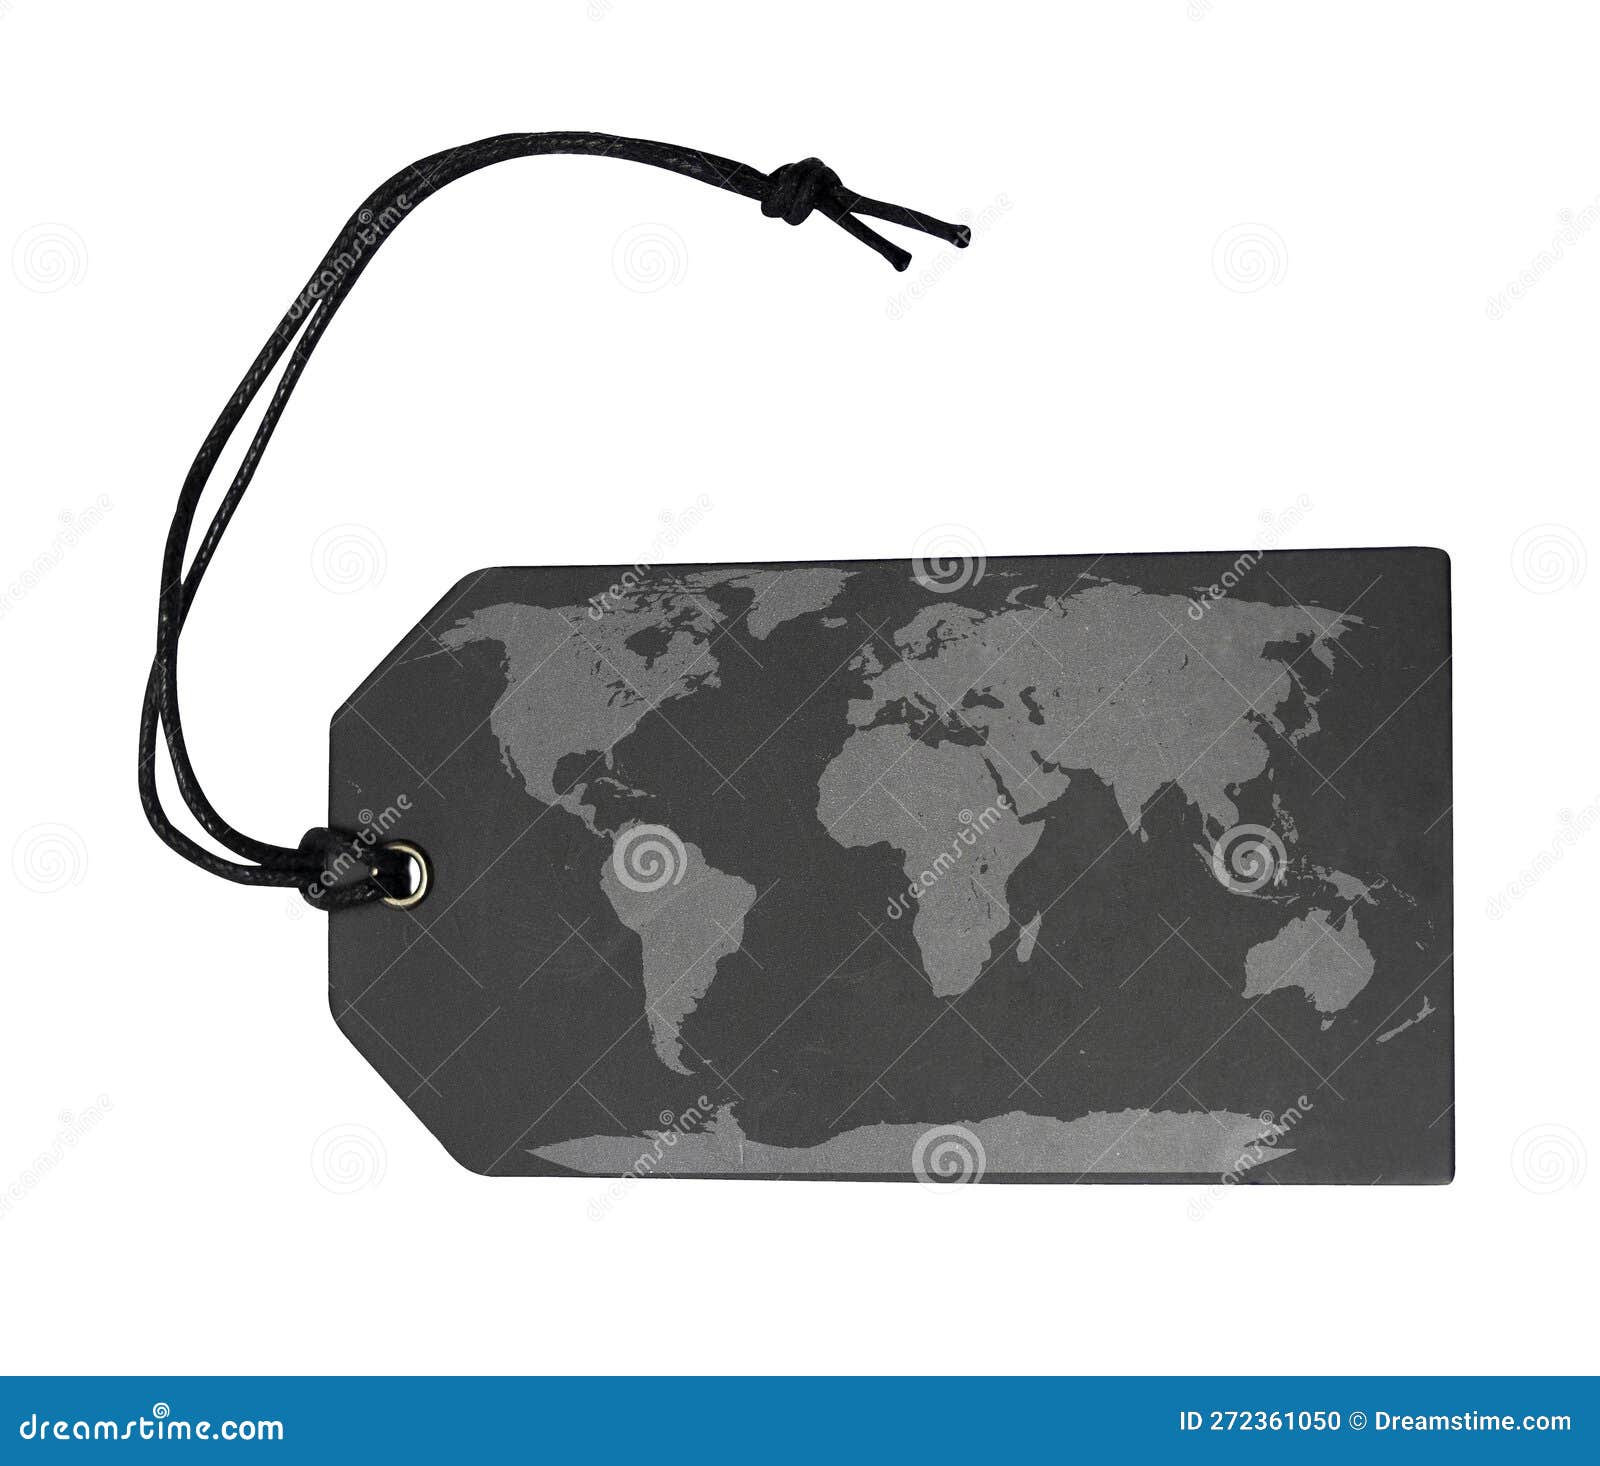 black label with grey world mapa